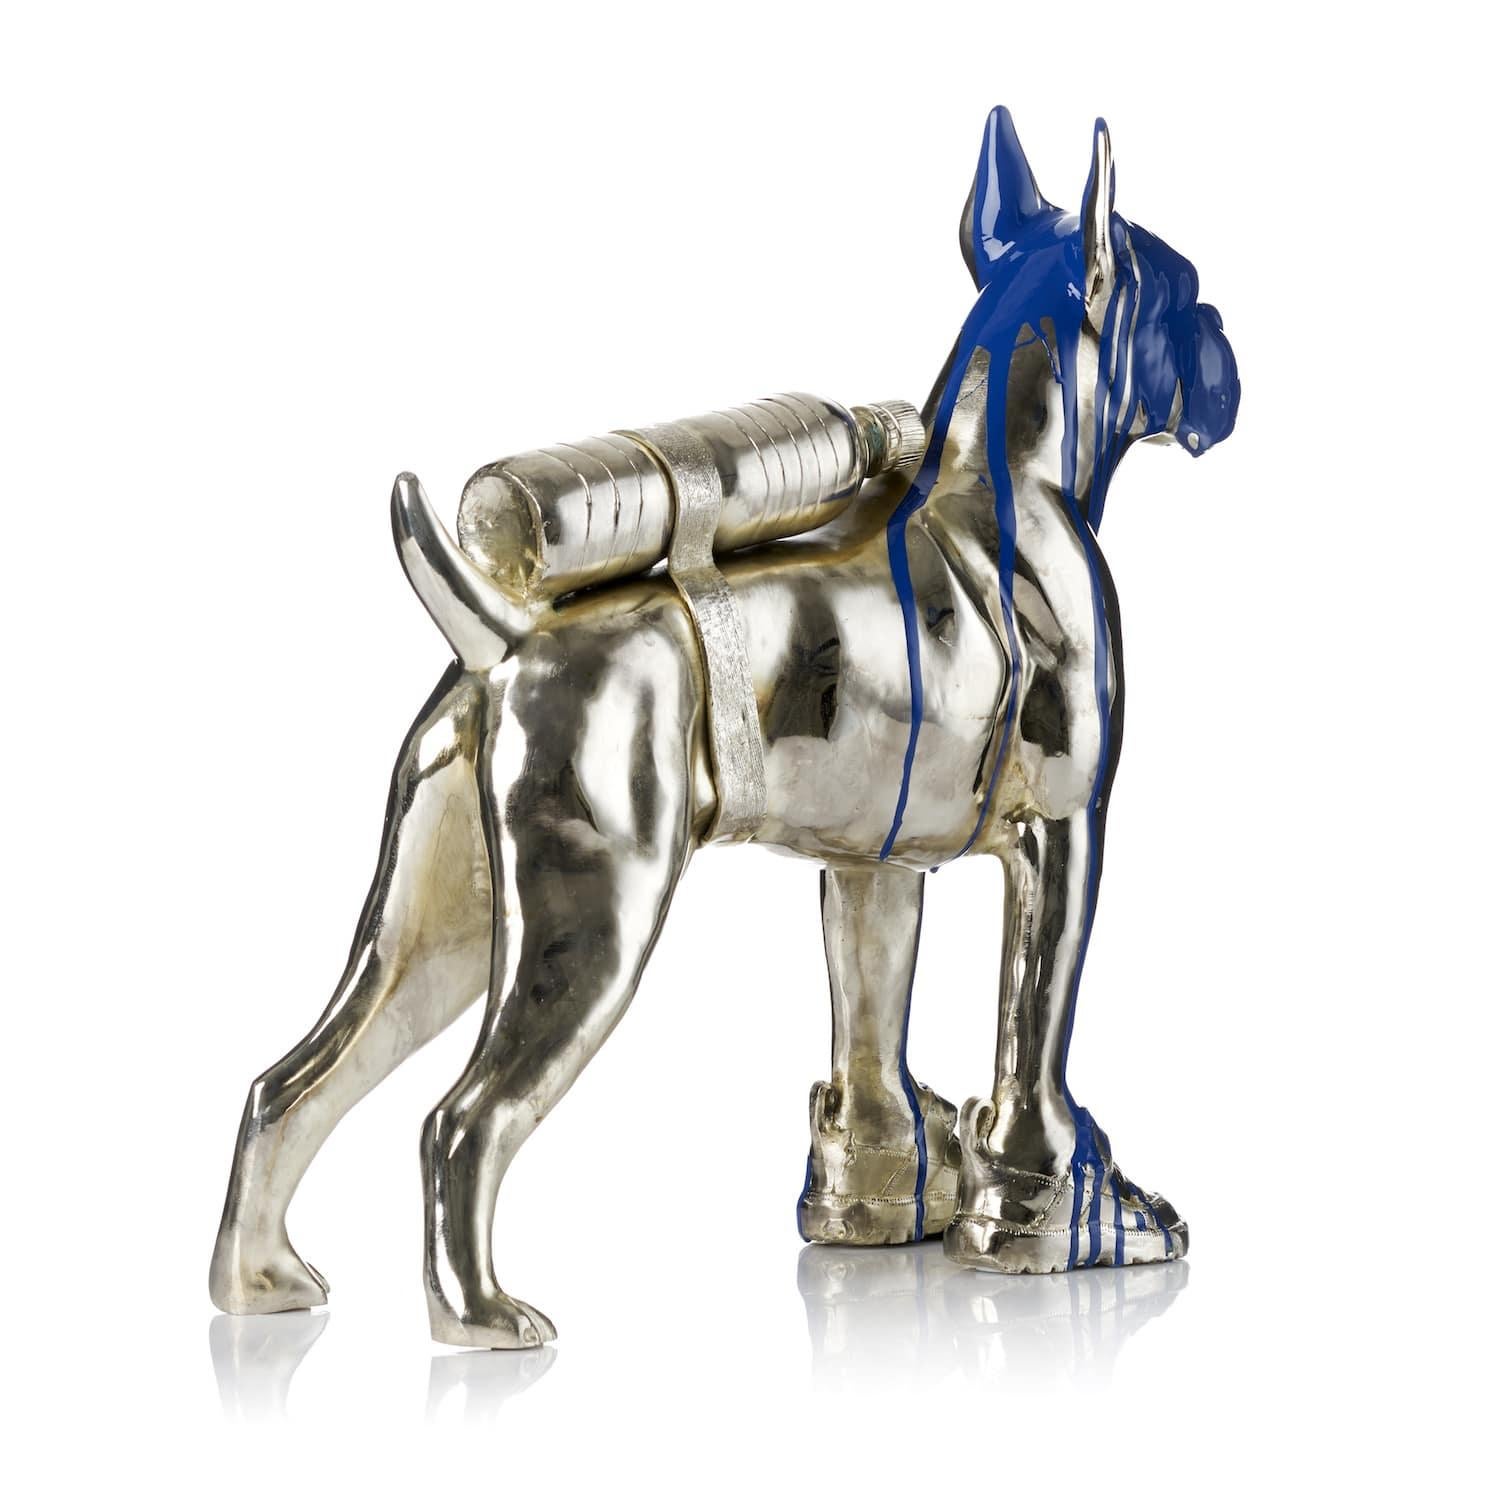 Cloned Bulldog with pet bottle - Pop Art Sculpture by William Sweetlove